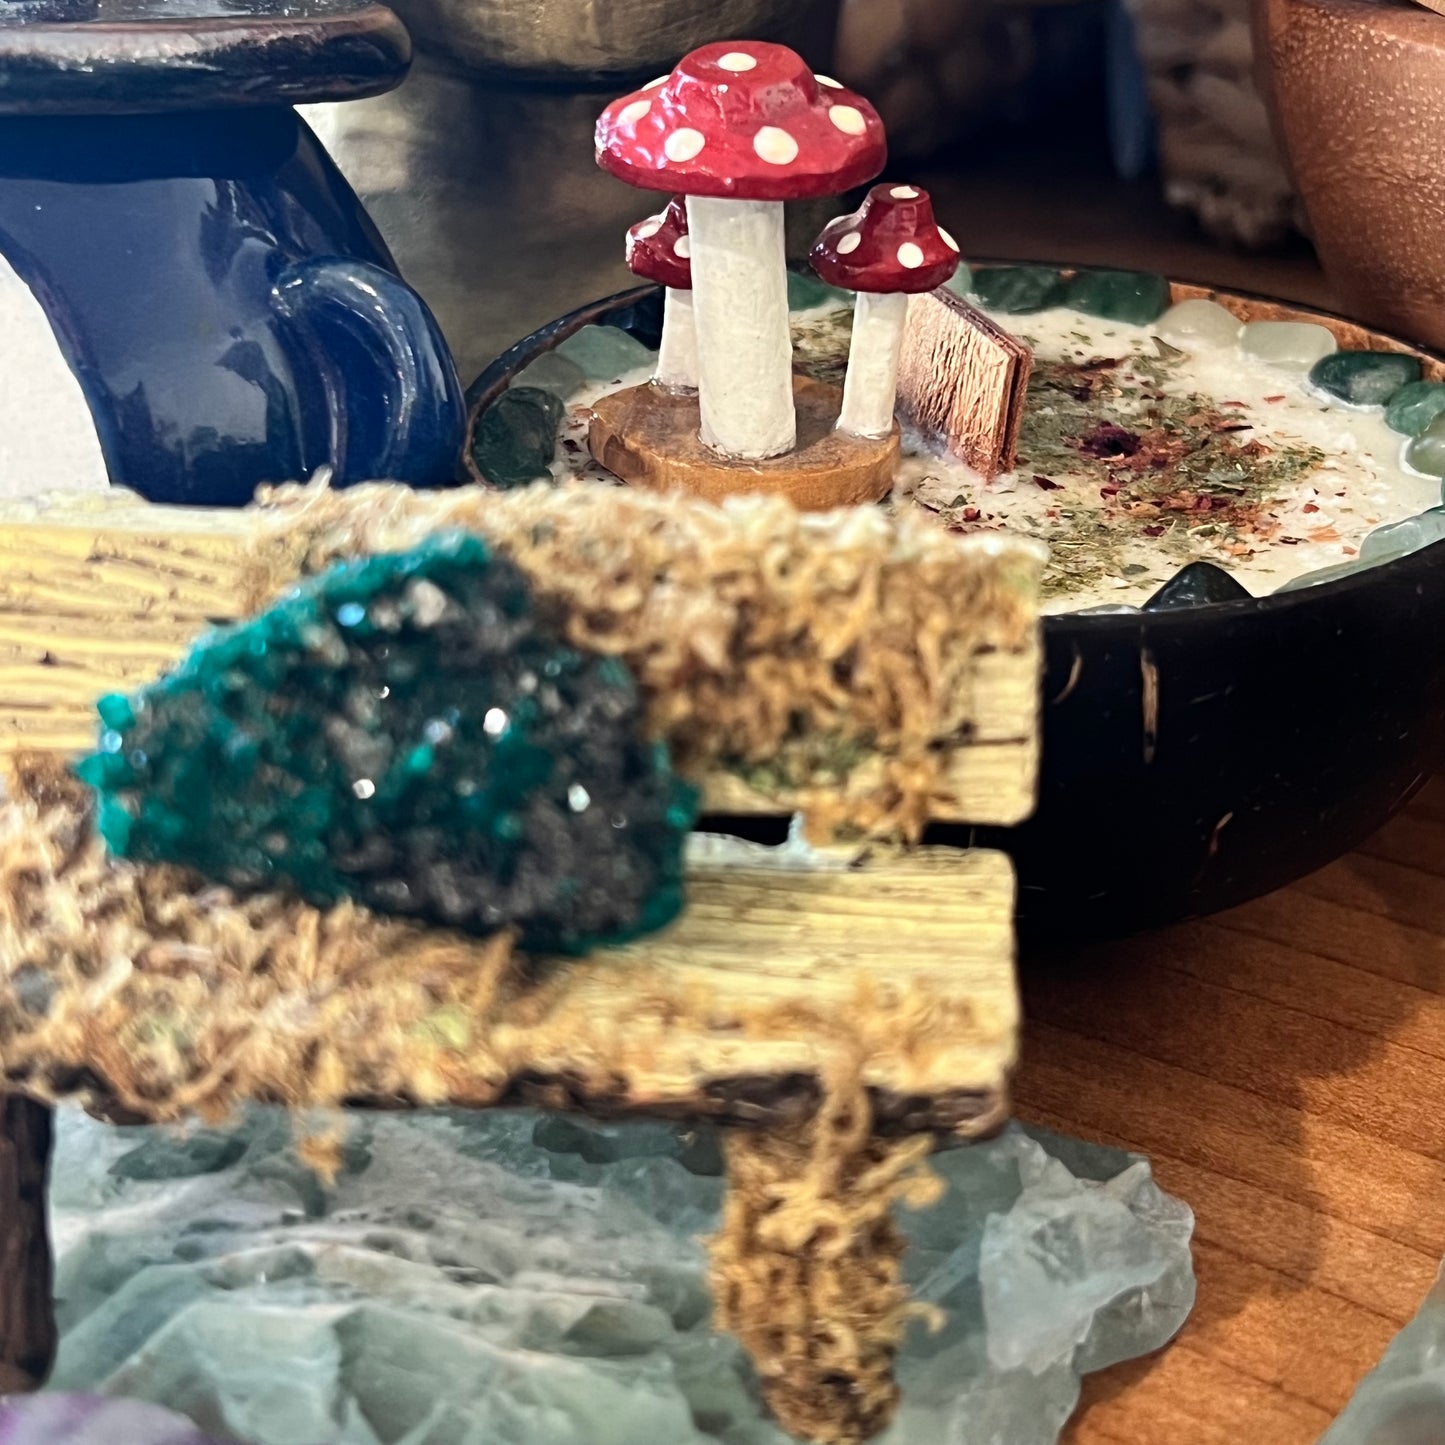 Mini Red Mushrooms from Guatemala